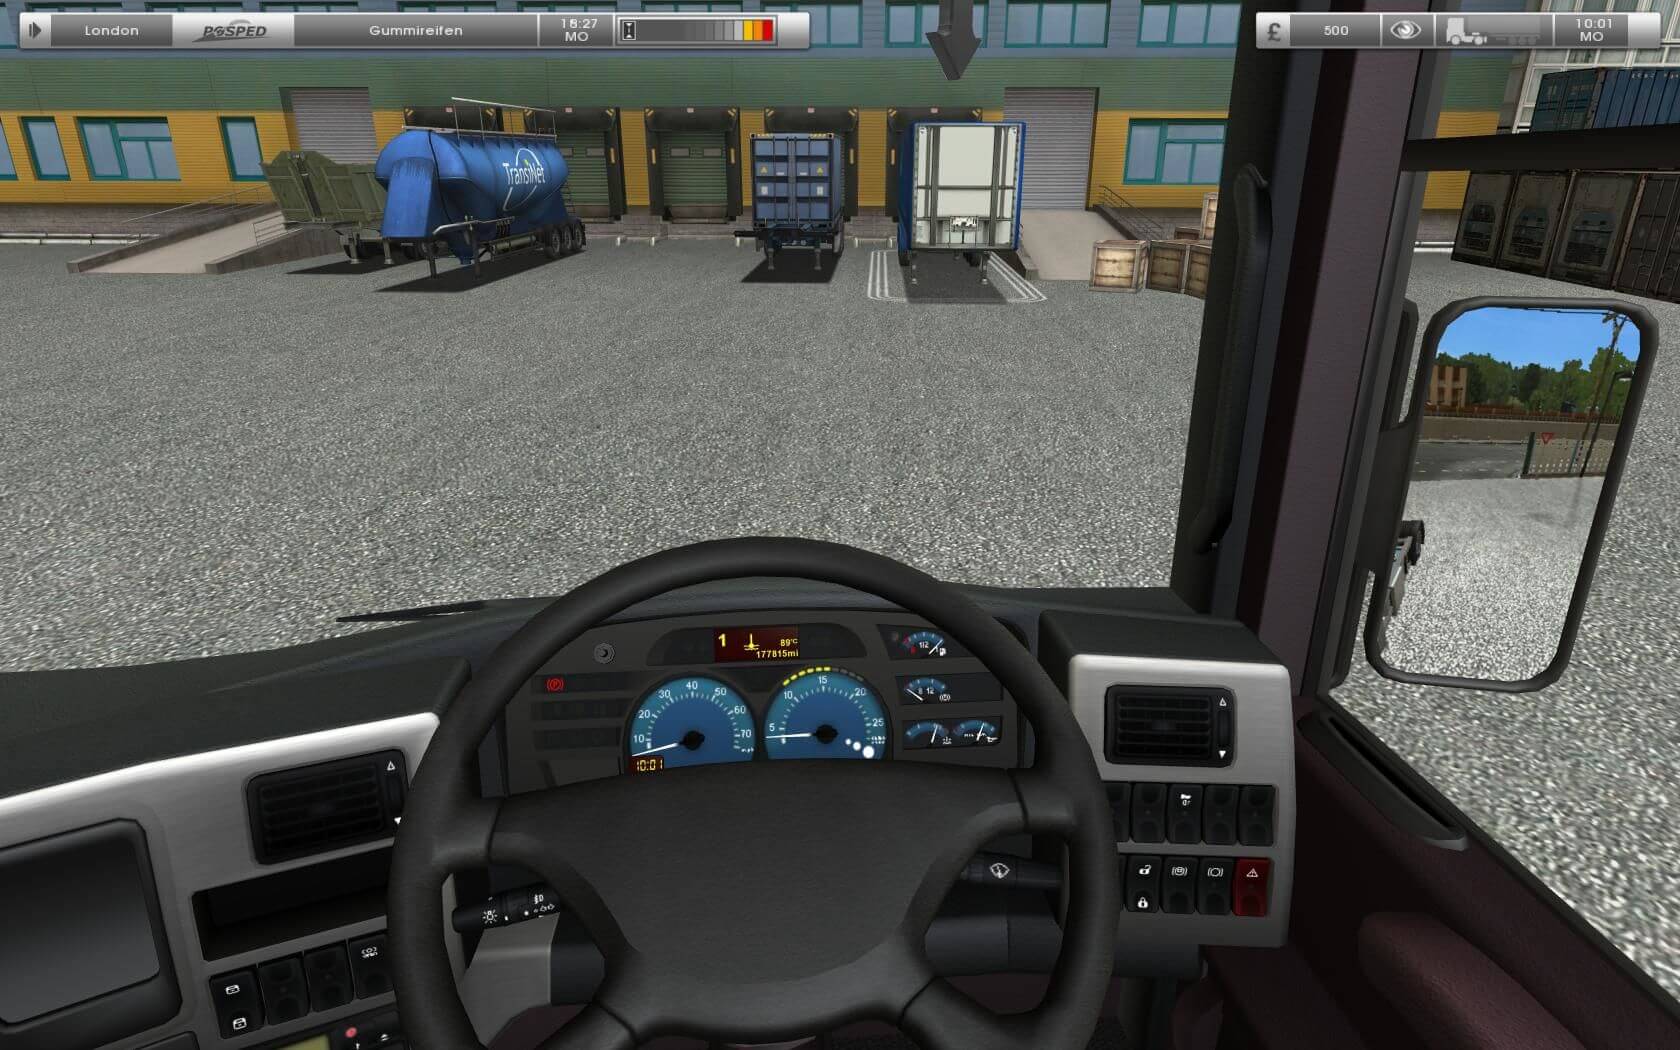 Download Uk Truck Simulator Windows My Abandonware